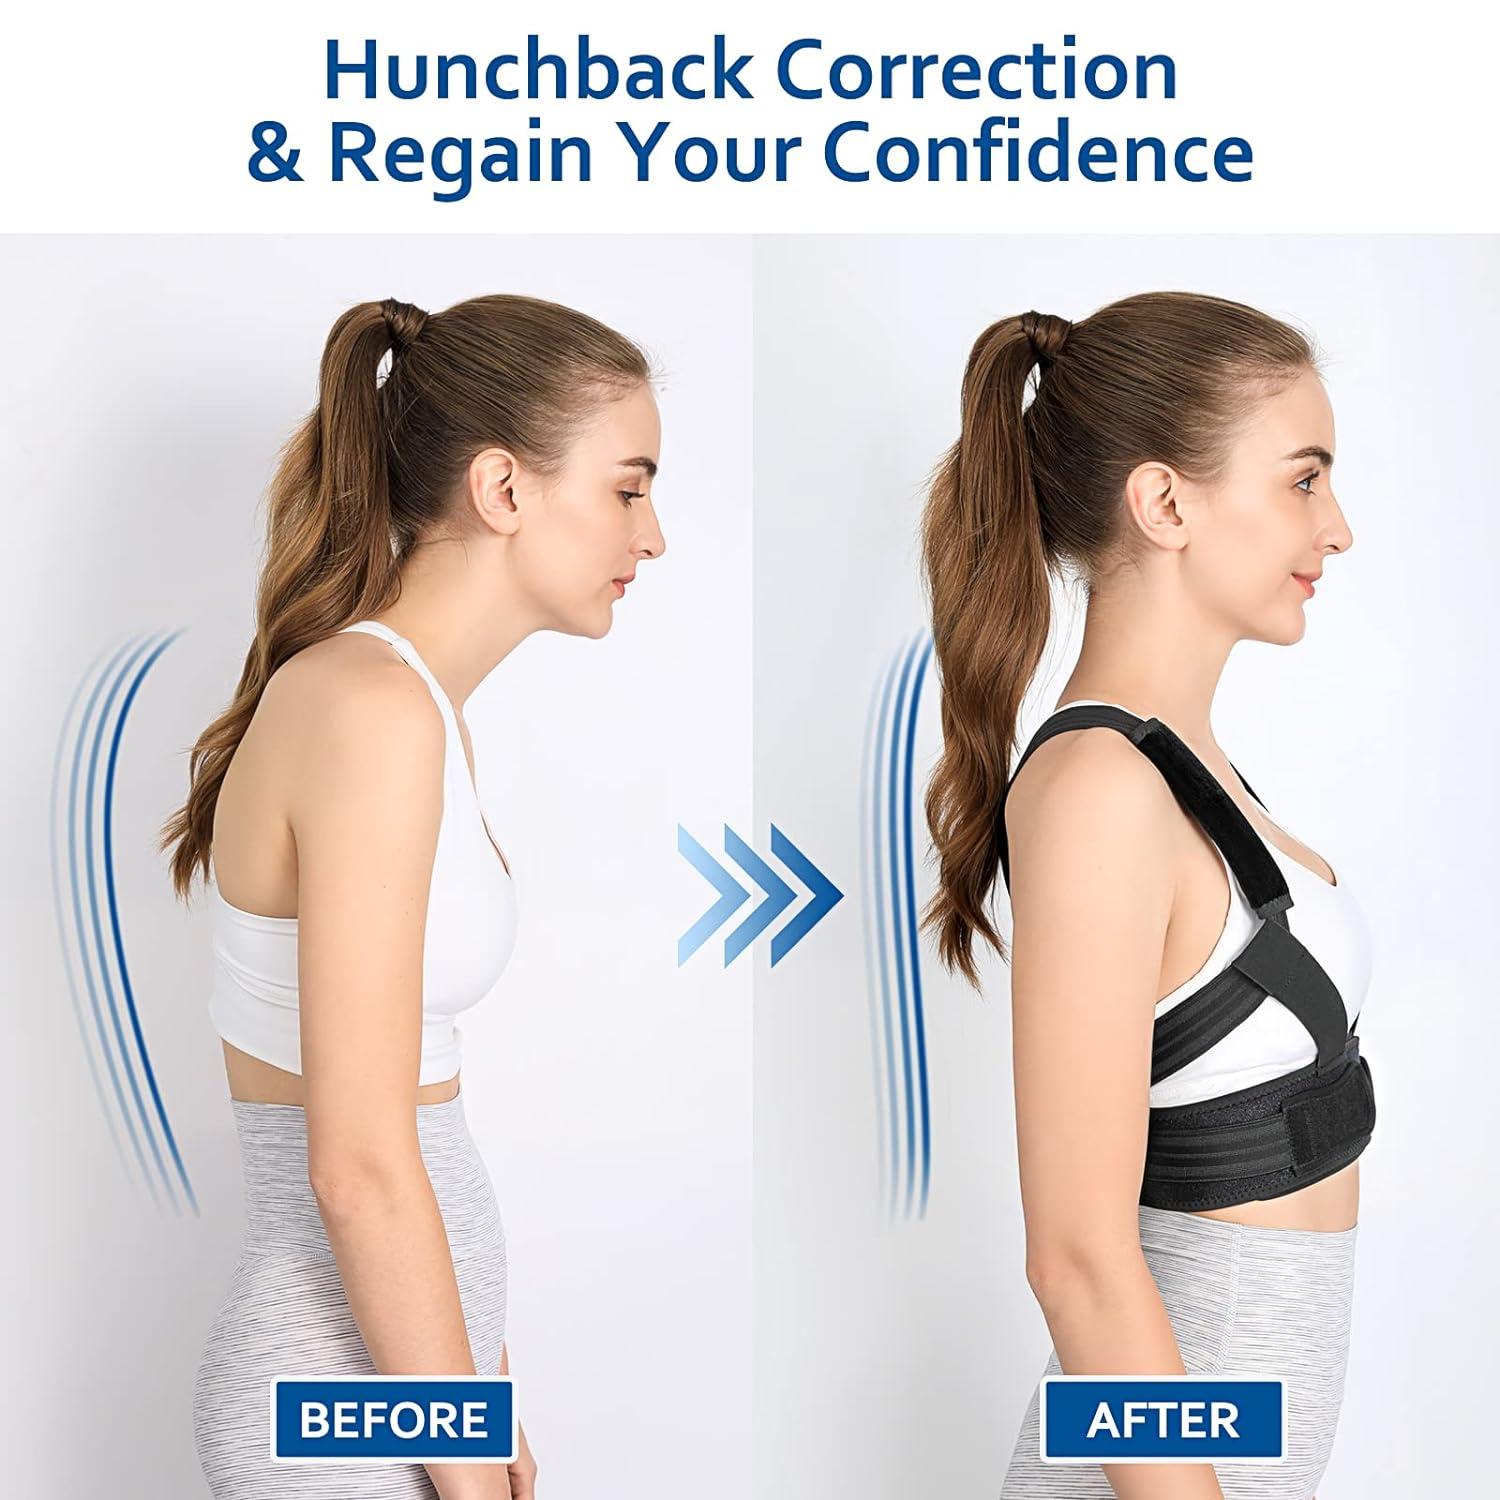 Mercase Posture Corrector for Women and Men Back Support Brace for Posture  Shoulder Kyphosis Scoliosis Rounded Shoulder Corrector Fully Adjustable and  Breathable (Large)